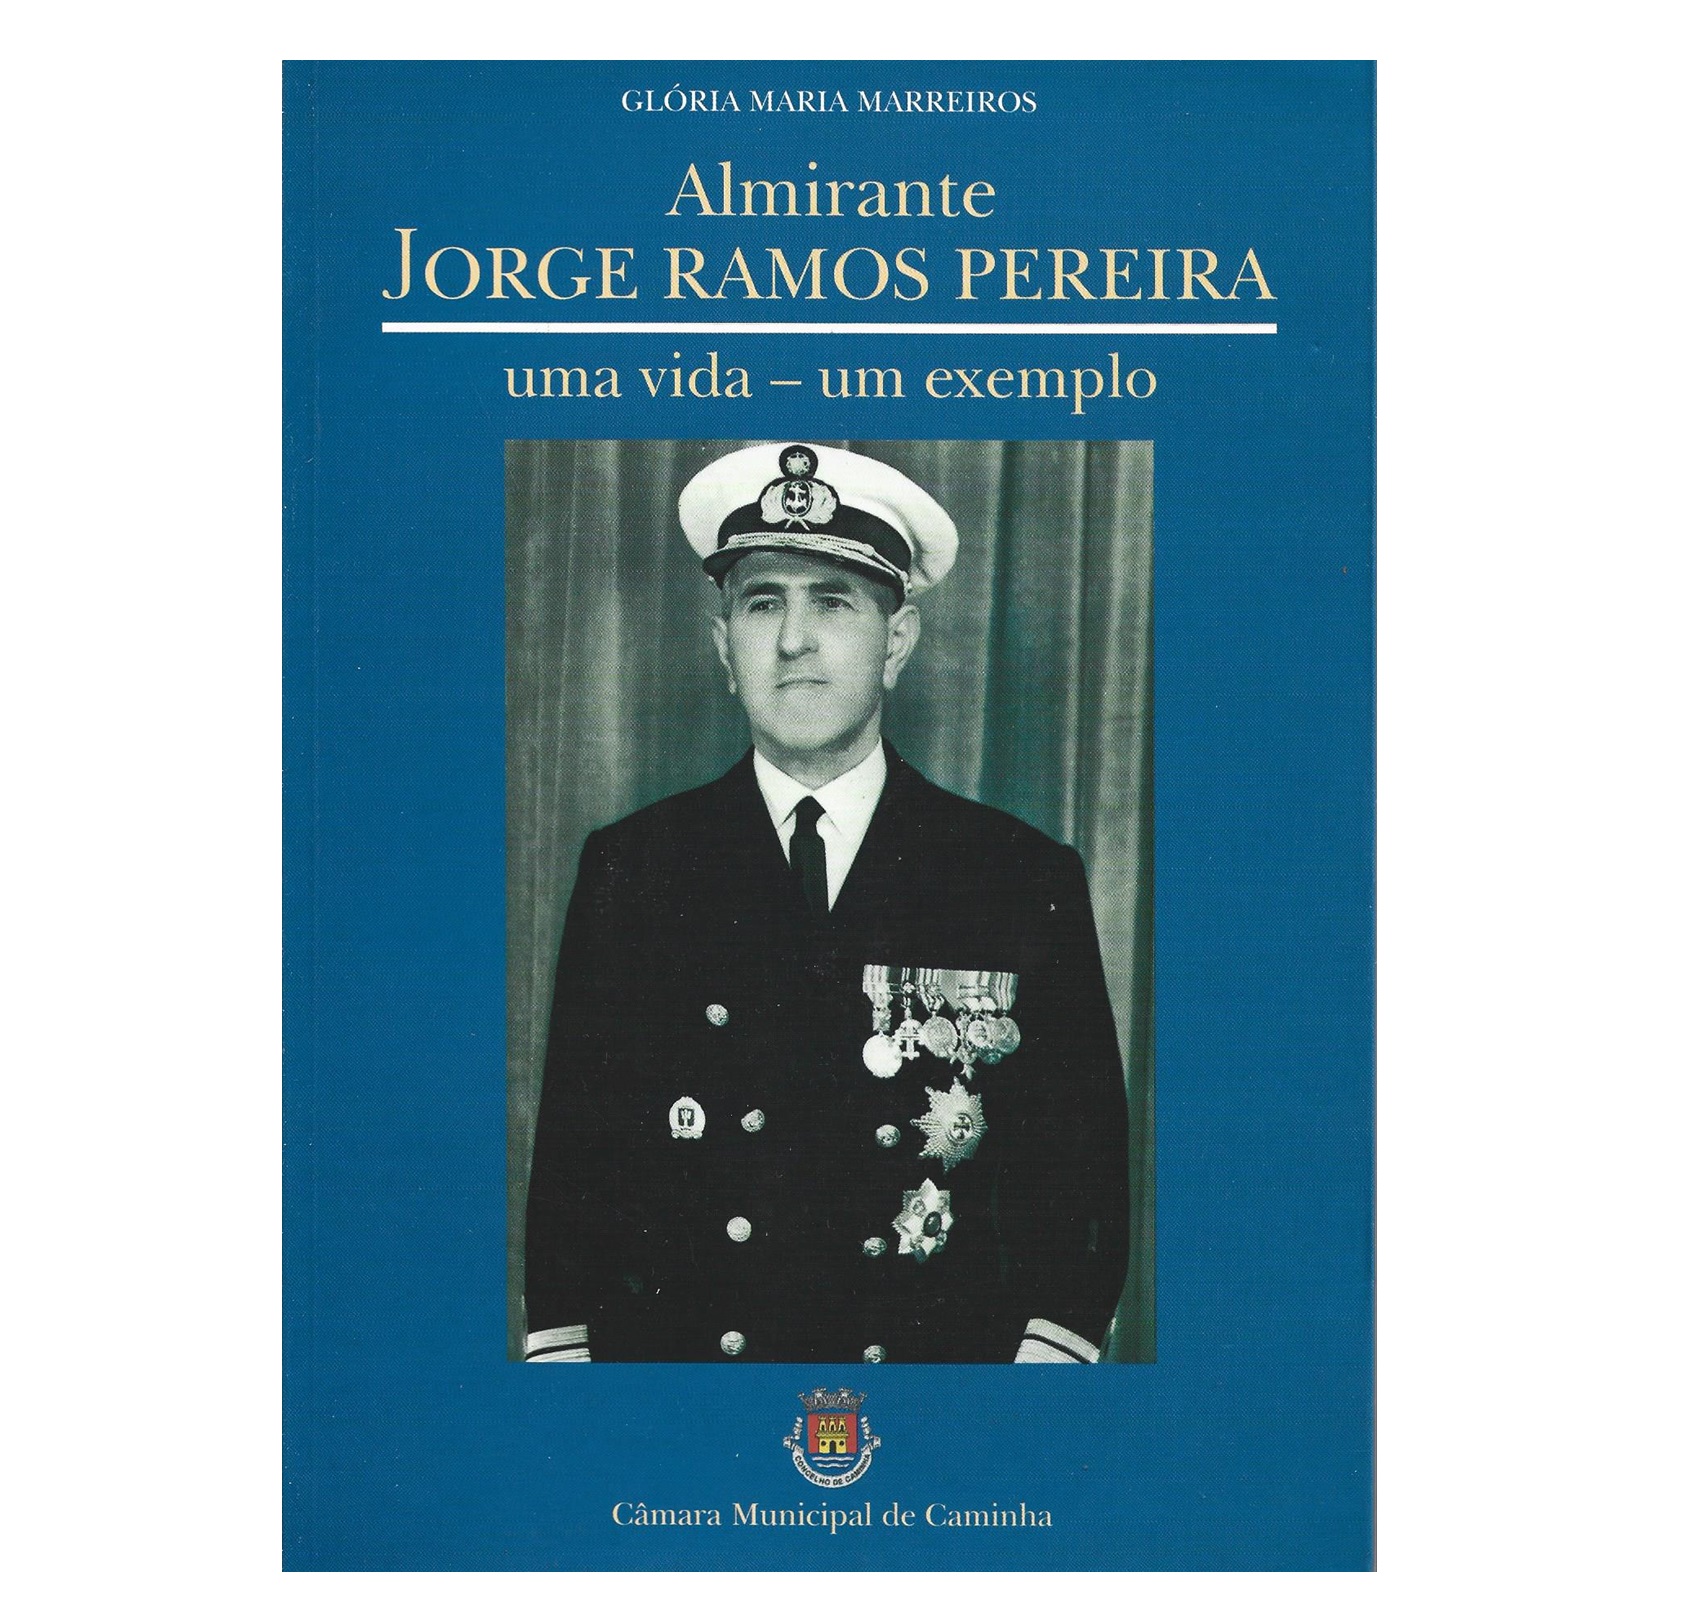  ALMIRANTE JORGE RAMOS PEREIRA